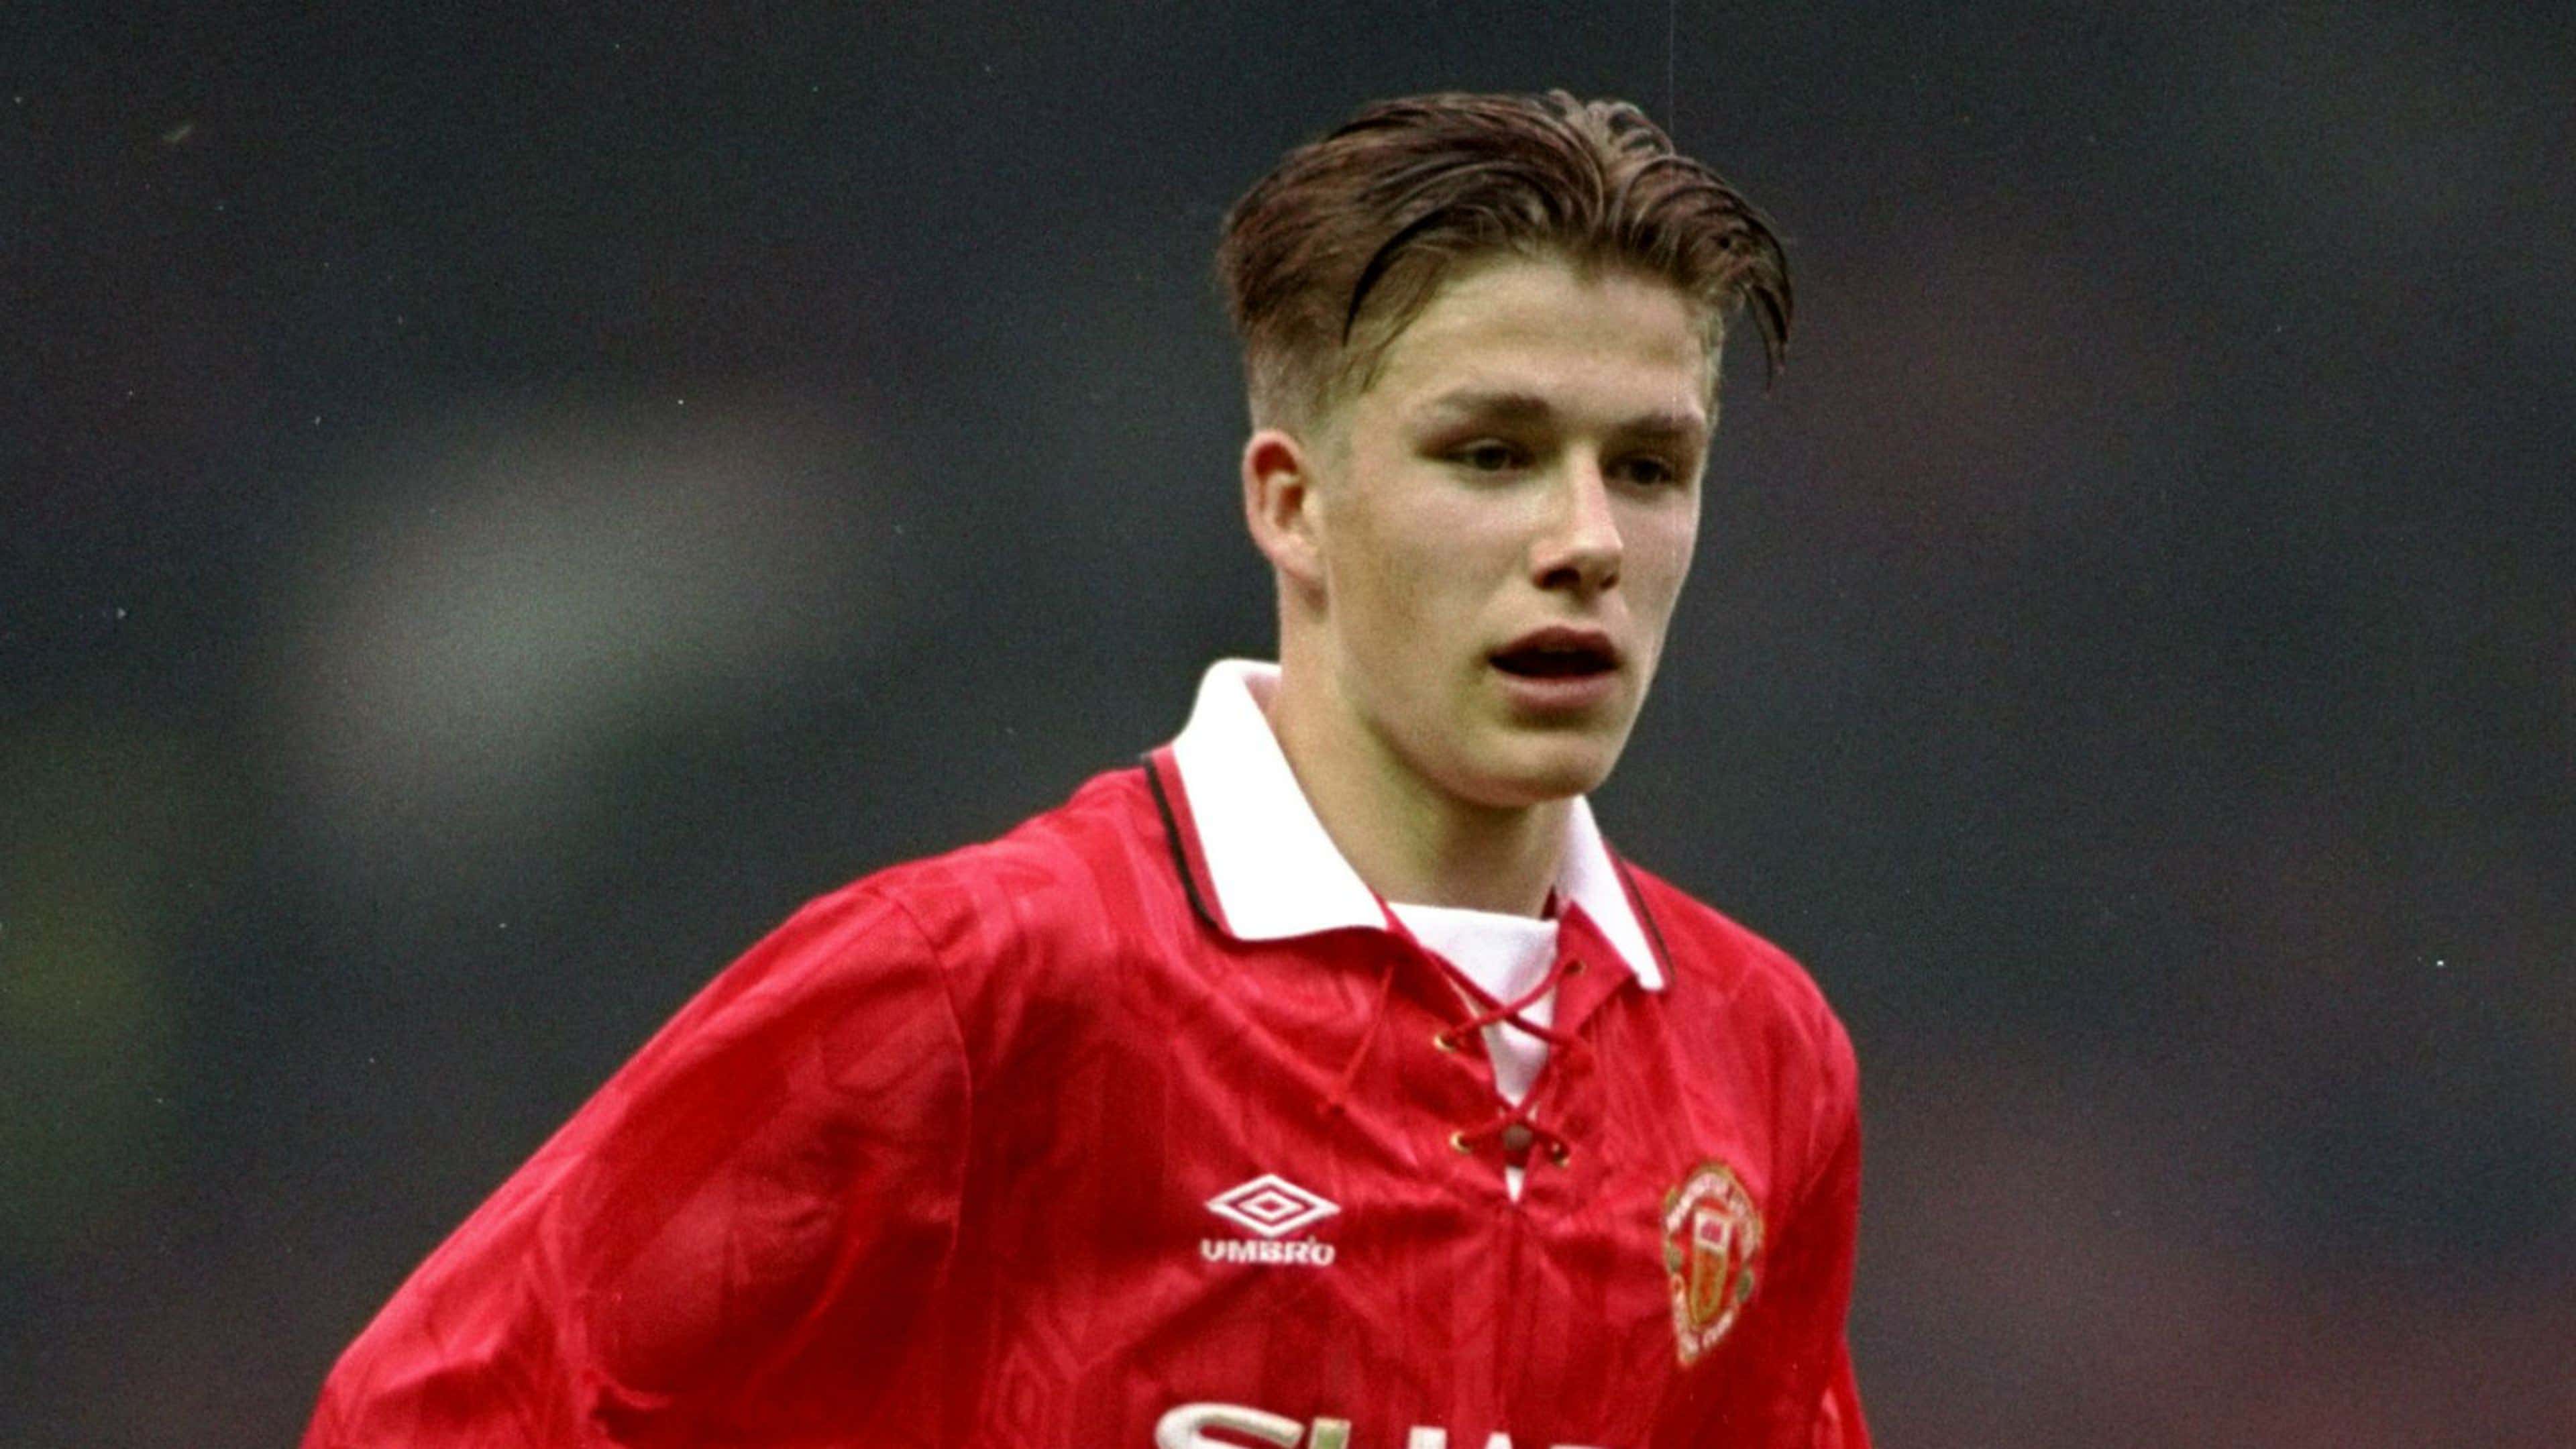 David Beckham Manchester United 1993